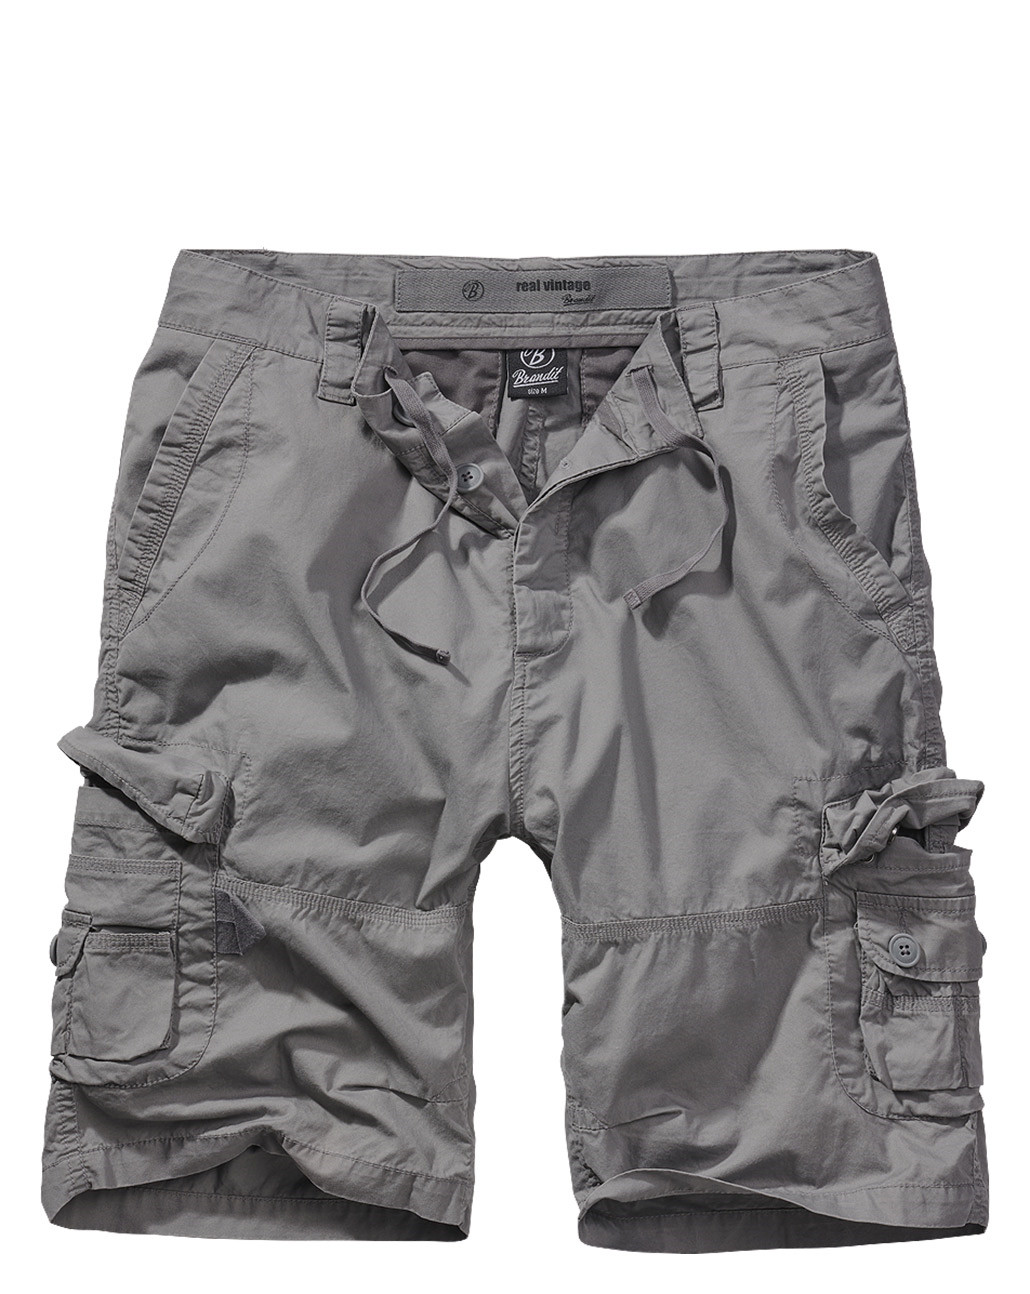 Brandit Ty Shorts (Charcoal, XL)